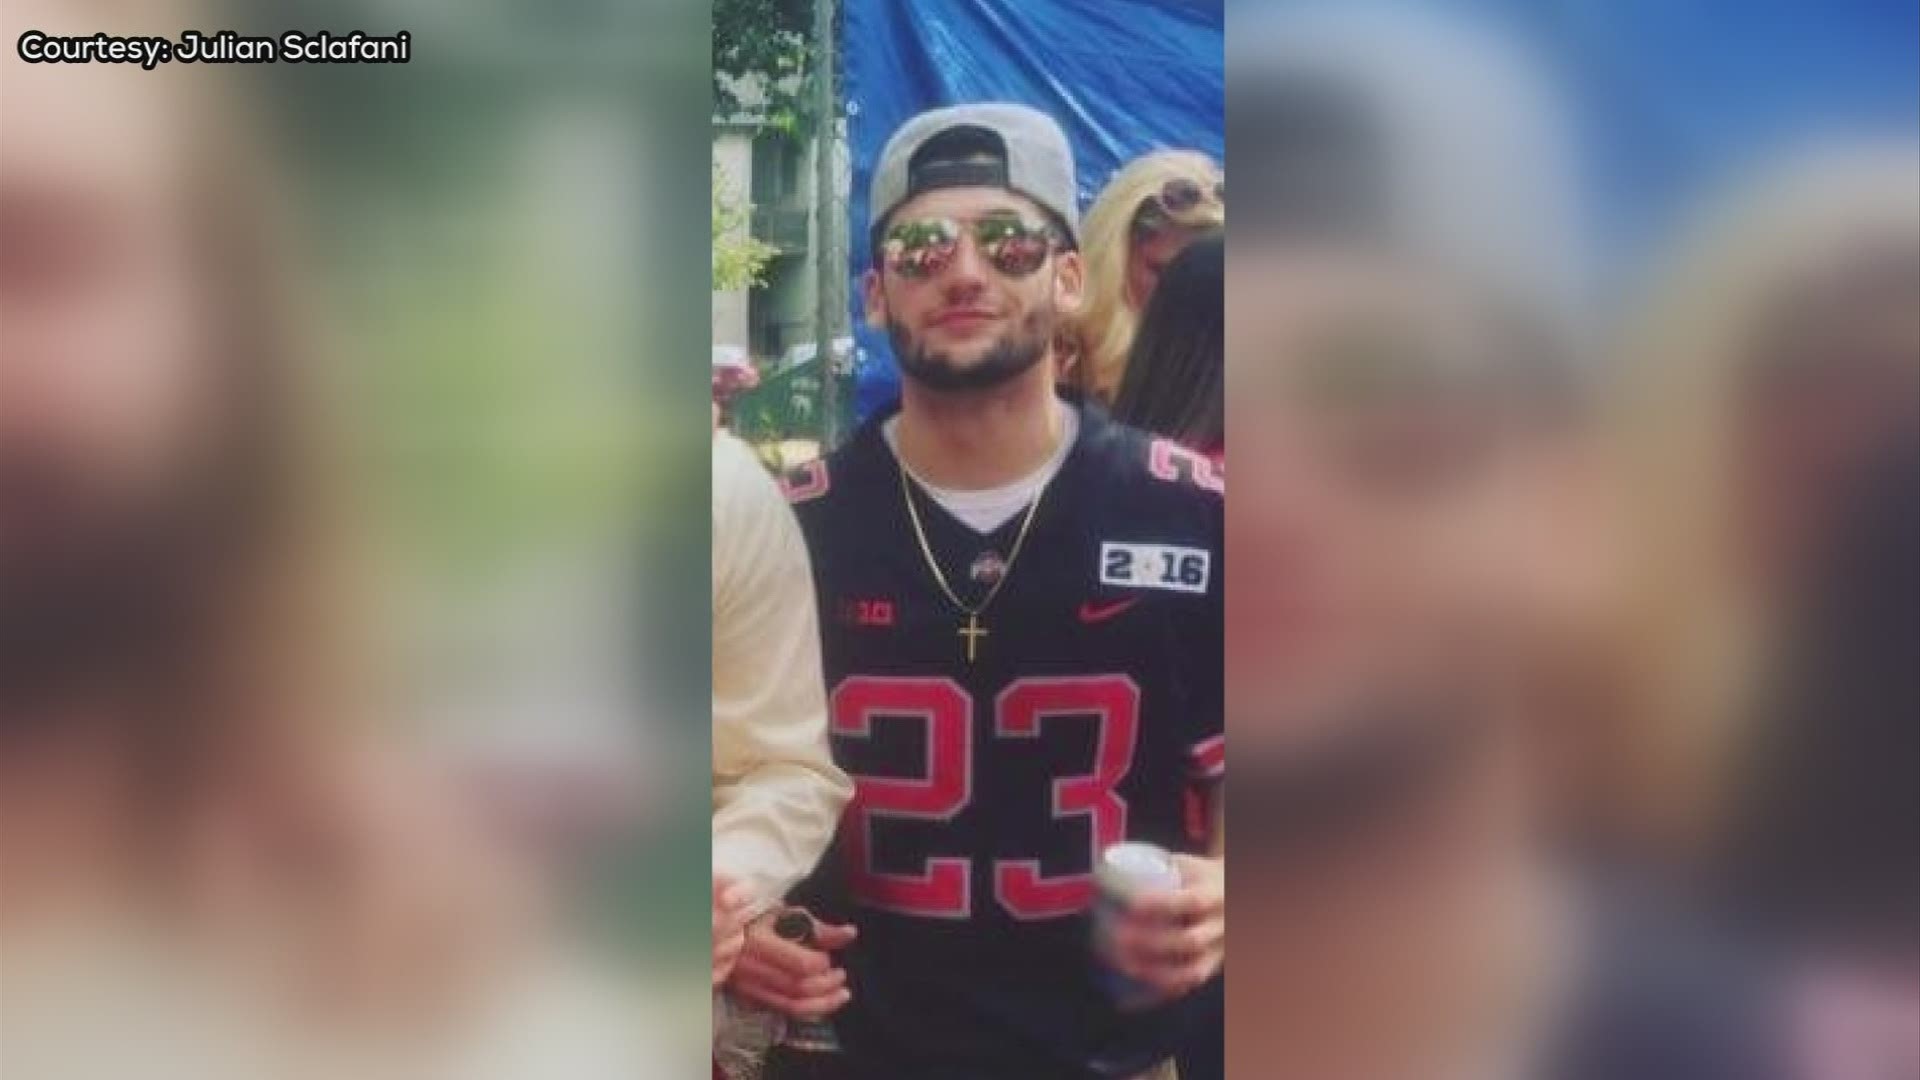 Chase Meola, 23, was shot and killed early Sunday morning.